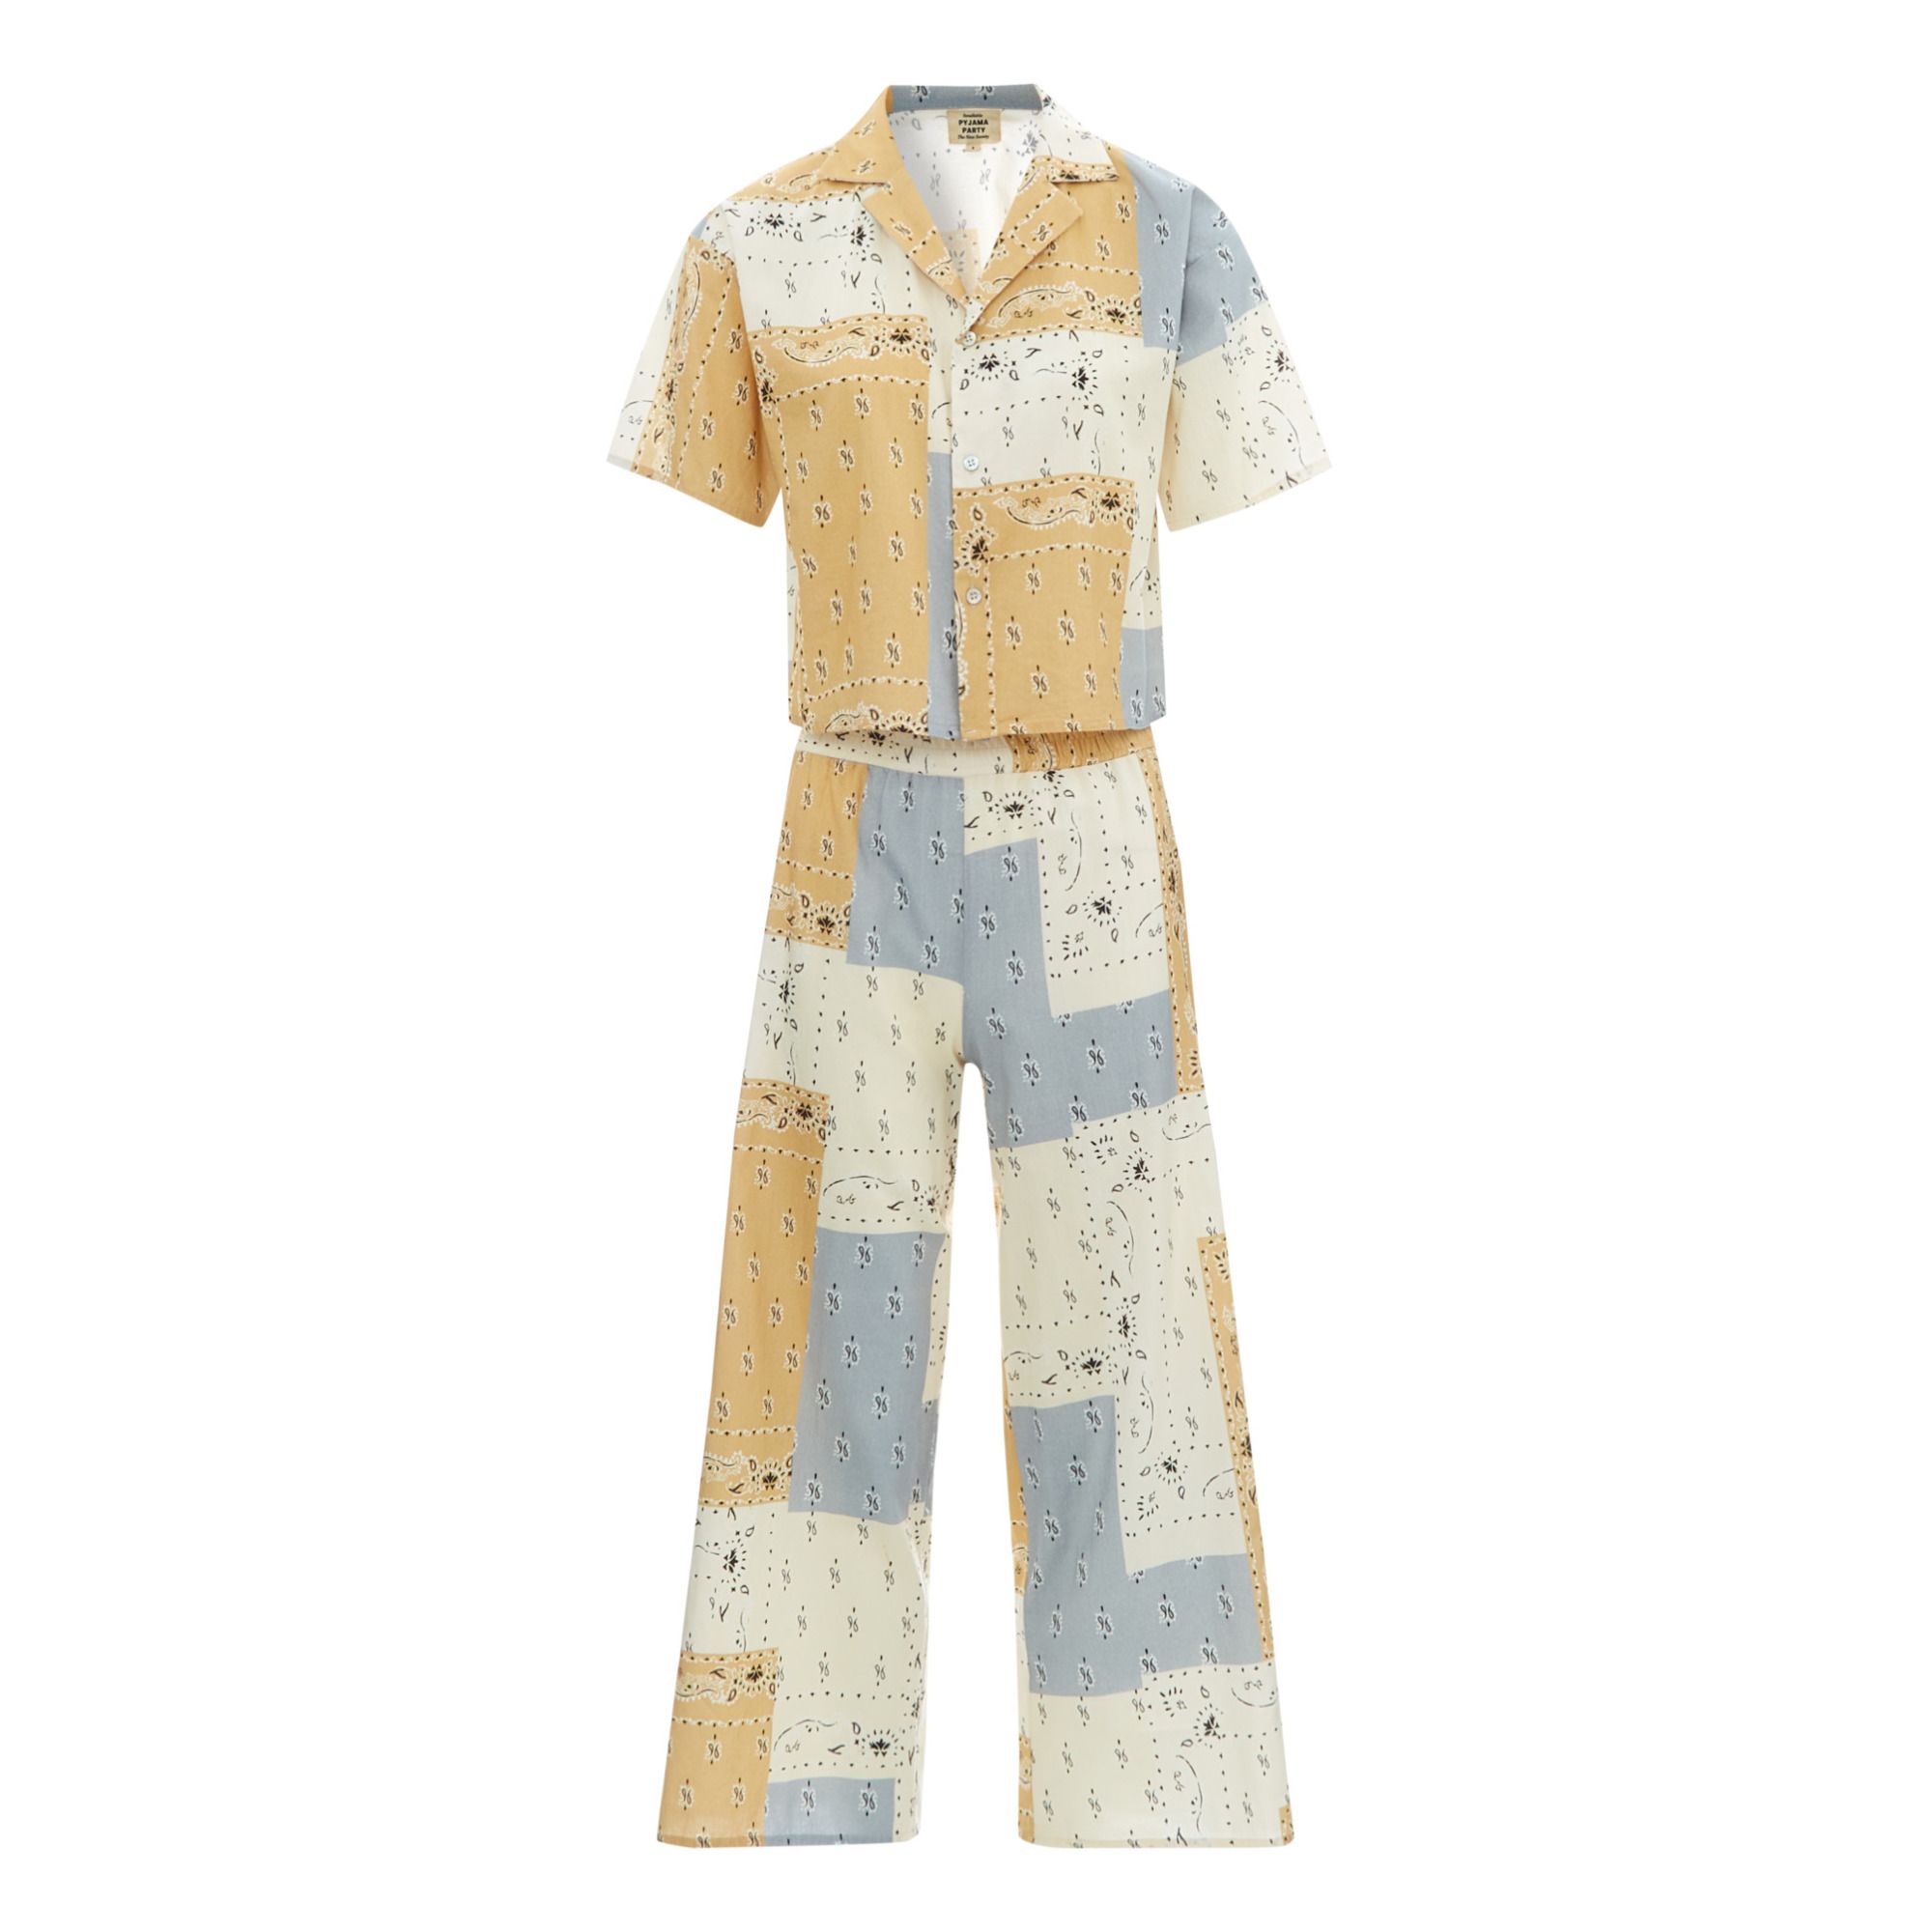 Exclusivité The New Society x Smallable Pyjama Party – Pyjama Chemise + Pantalon Ginger - Collection Femme - Beige- Image produit n°0